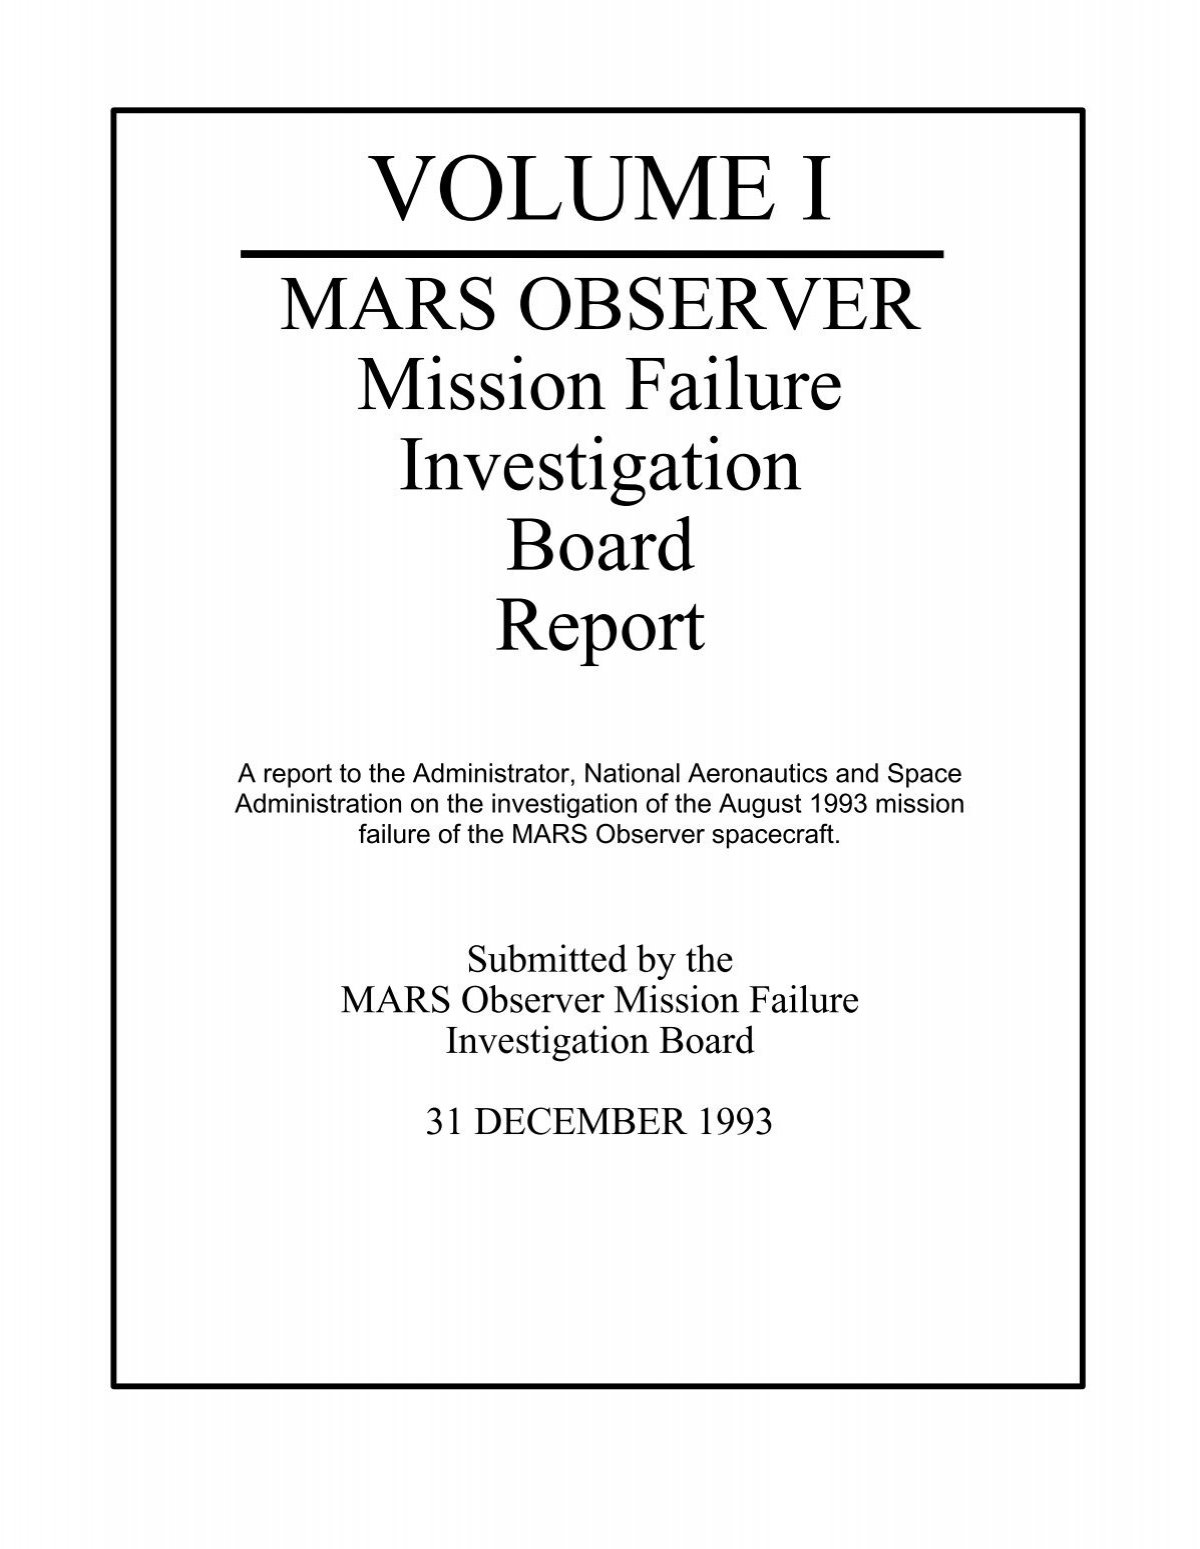 Mars Observer Mission Failure Investigation Board Report